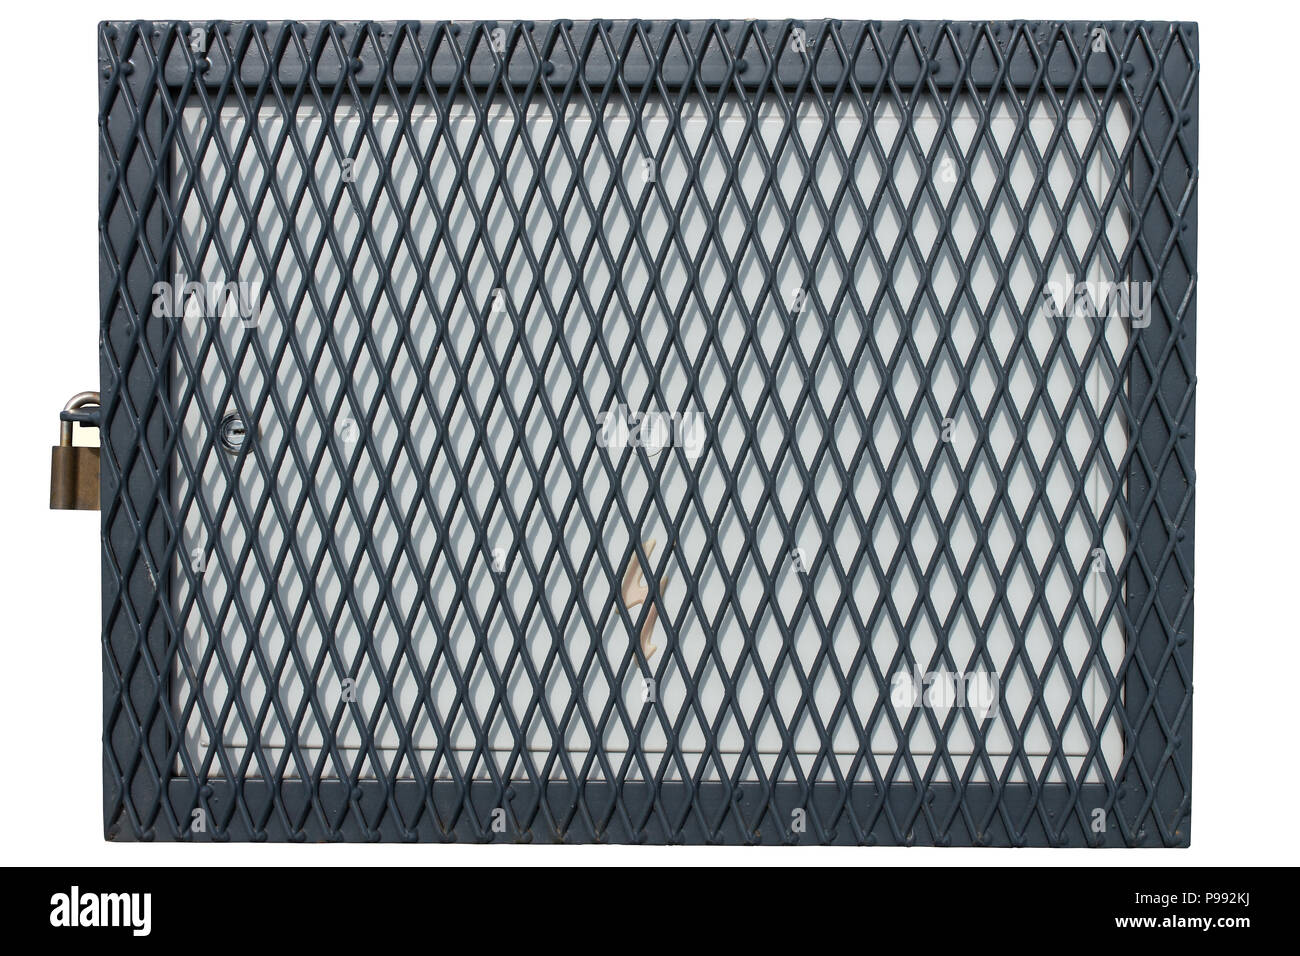 Rejilla con forma de rombo bloqueada con candado, aislado sobre fondo blanco Fotografía stock - Alamy